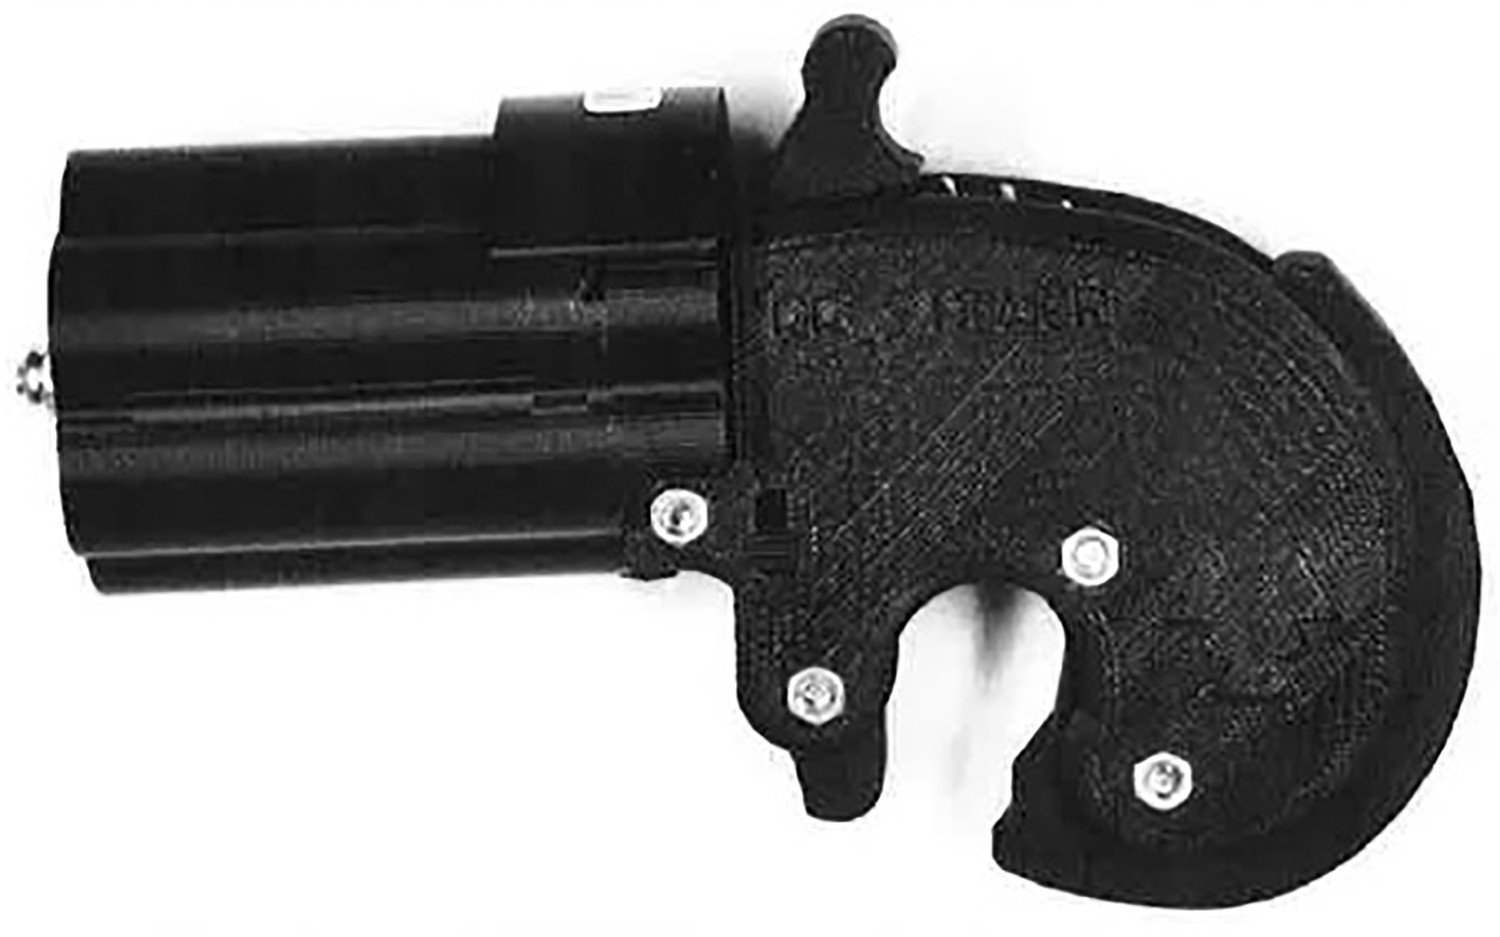 The gun manufactured with a 3D printer by Tendai Muswere. Photo: EPA-EFE